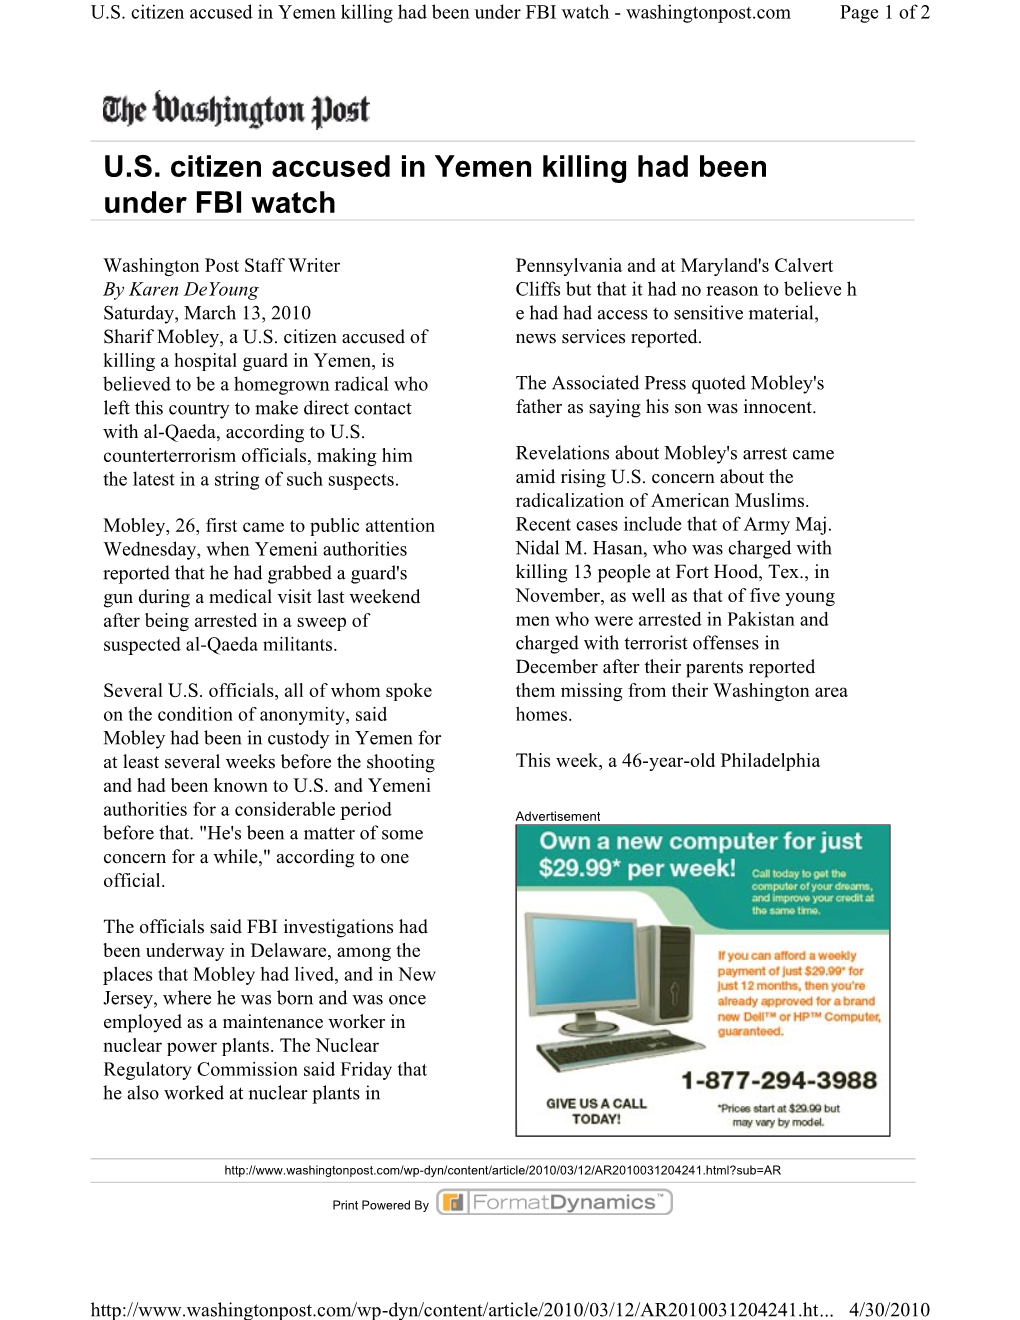 U.S. Citizen Accused in Yemen Killing Had Been Under FBI Watch - Washingtonpost.Com Page 1 of 2